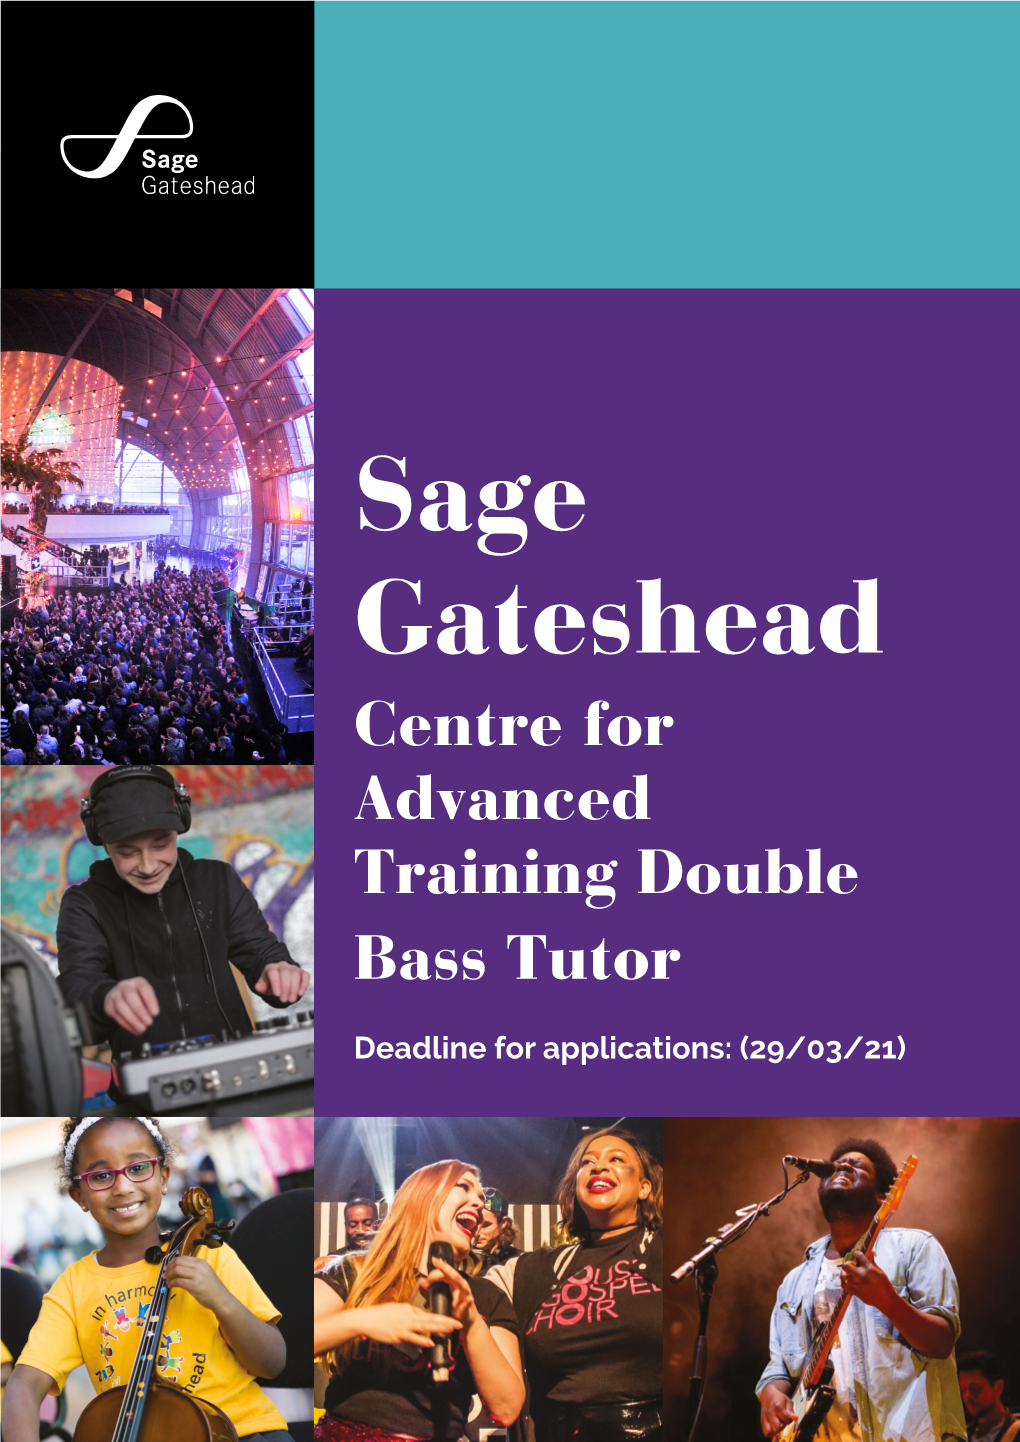 Sage Gateshead Centre for Advanced Training Double Bass Tutor